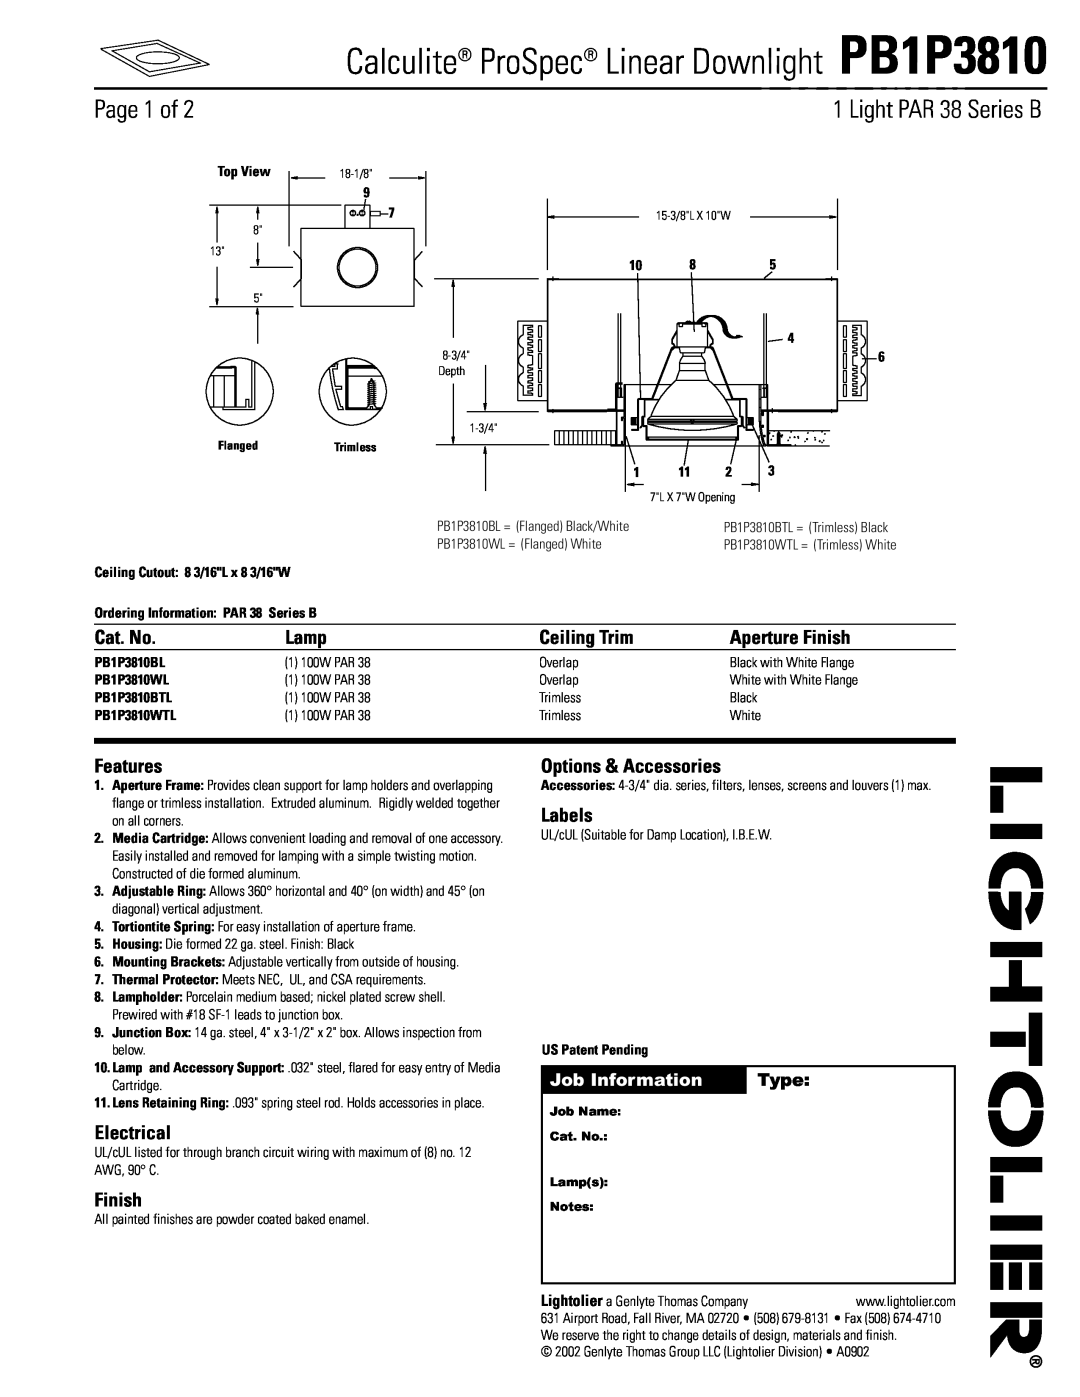 Lightolier manual Calculite ProSpec Linear Downlight PB1P3810 